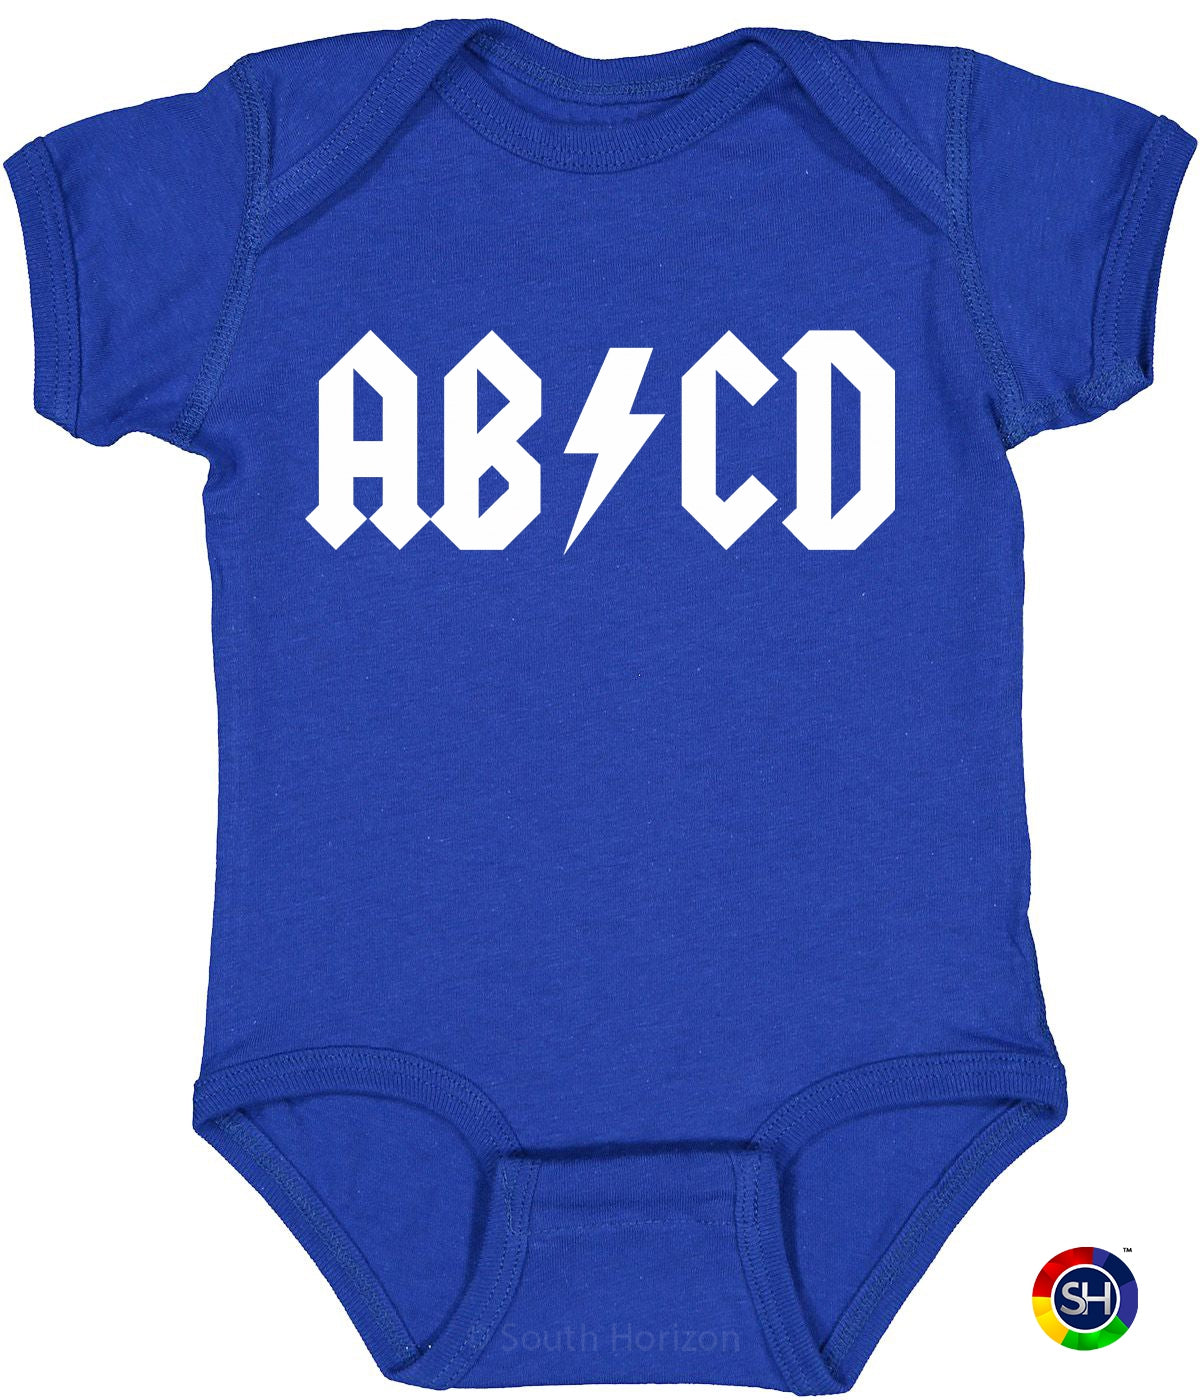 AB/CD Infant BodySuit (#974-10)